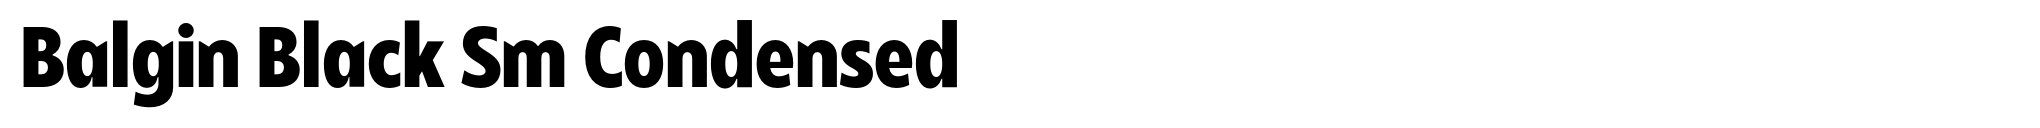 Balgin Black Sm Condensed image